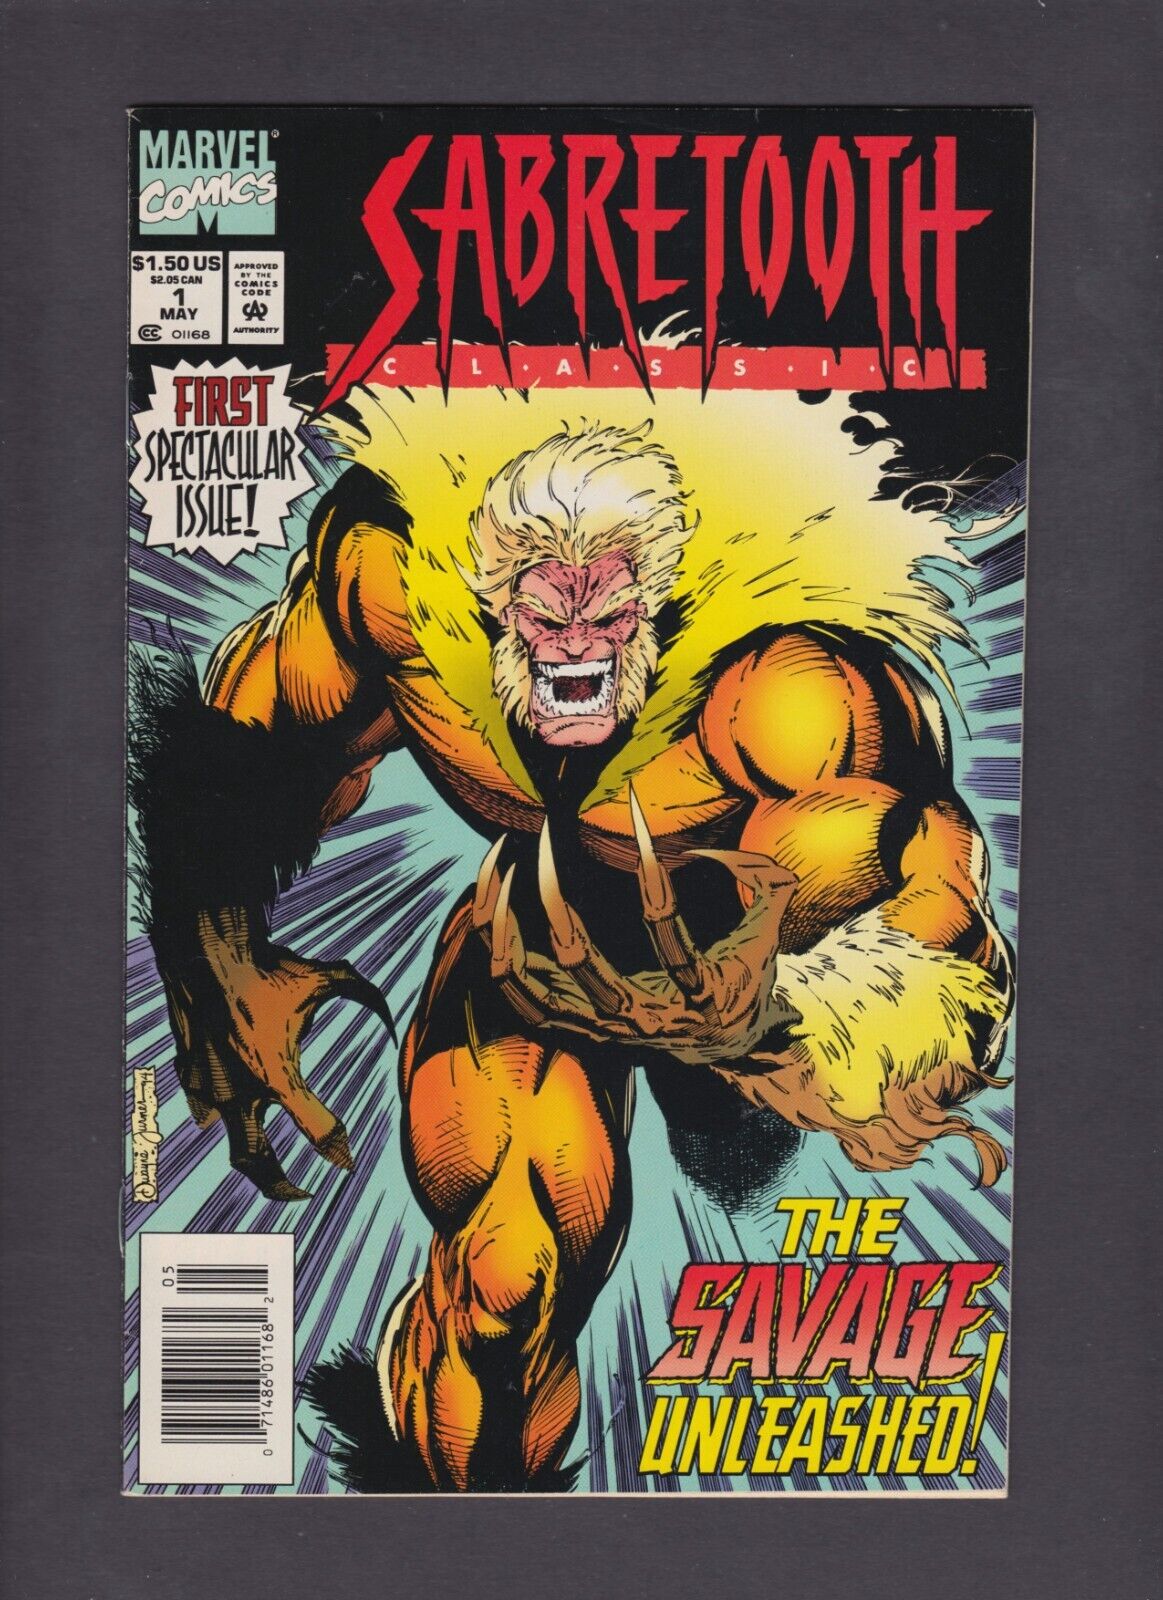 Sabretooth Classic #1 Marvel Comics 1994 reprints Power Man and Iron Fist #66